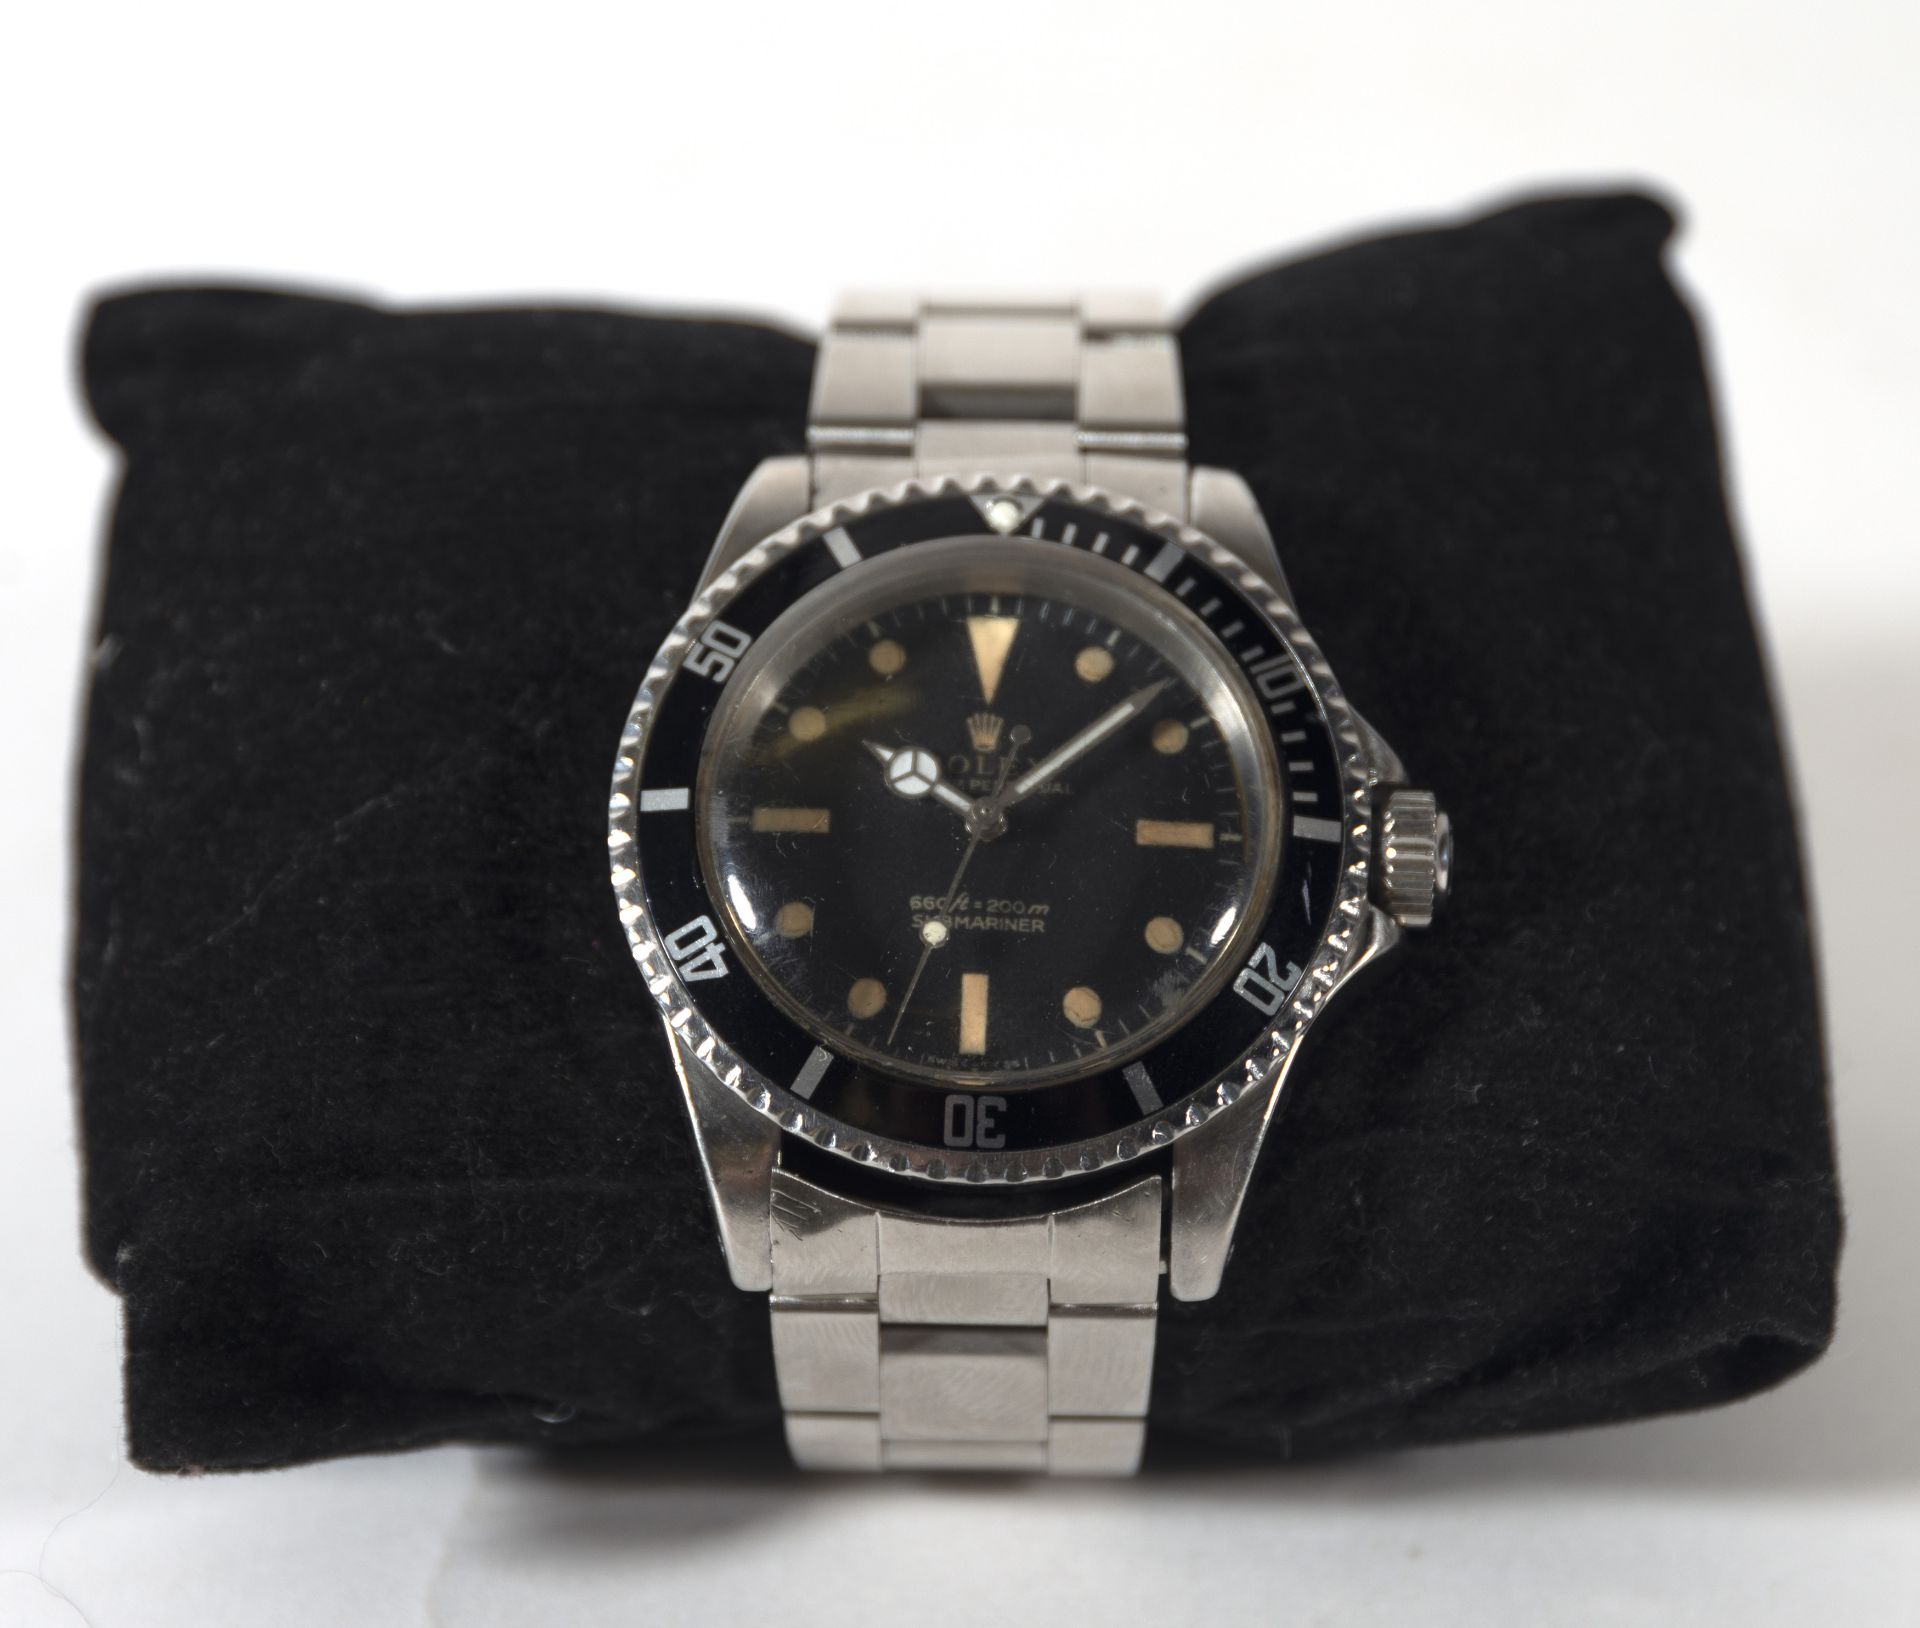 Elegant Rolex Submariner watch model 5513 vintage in steel, 1960s